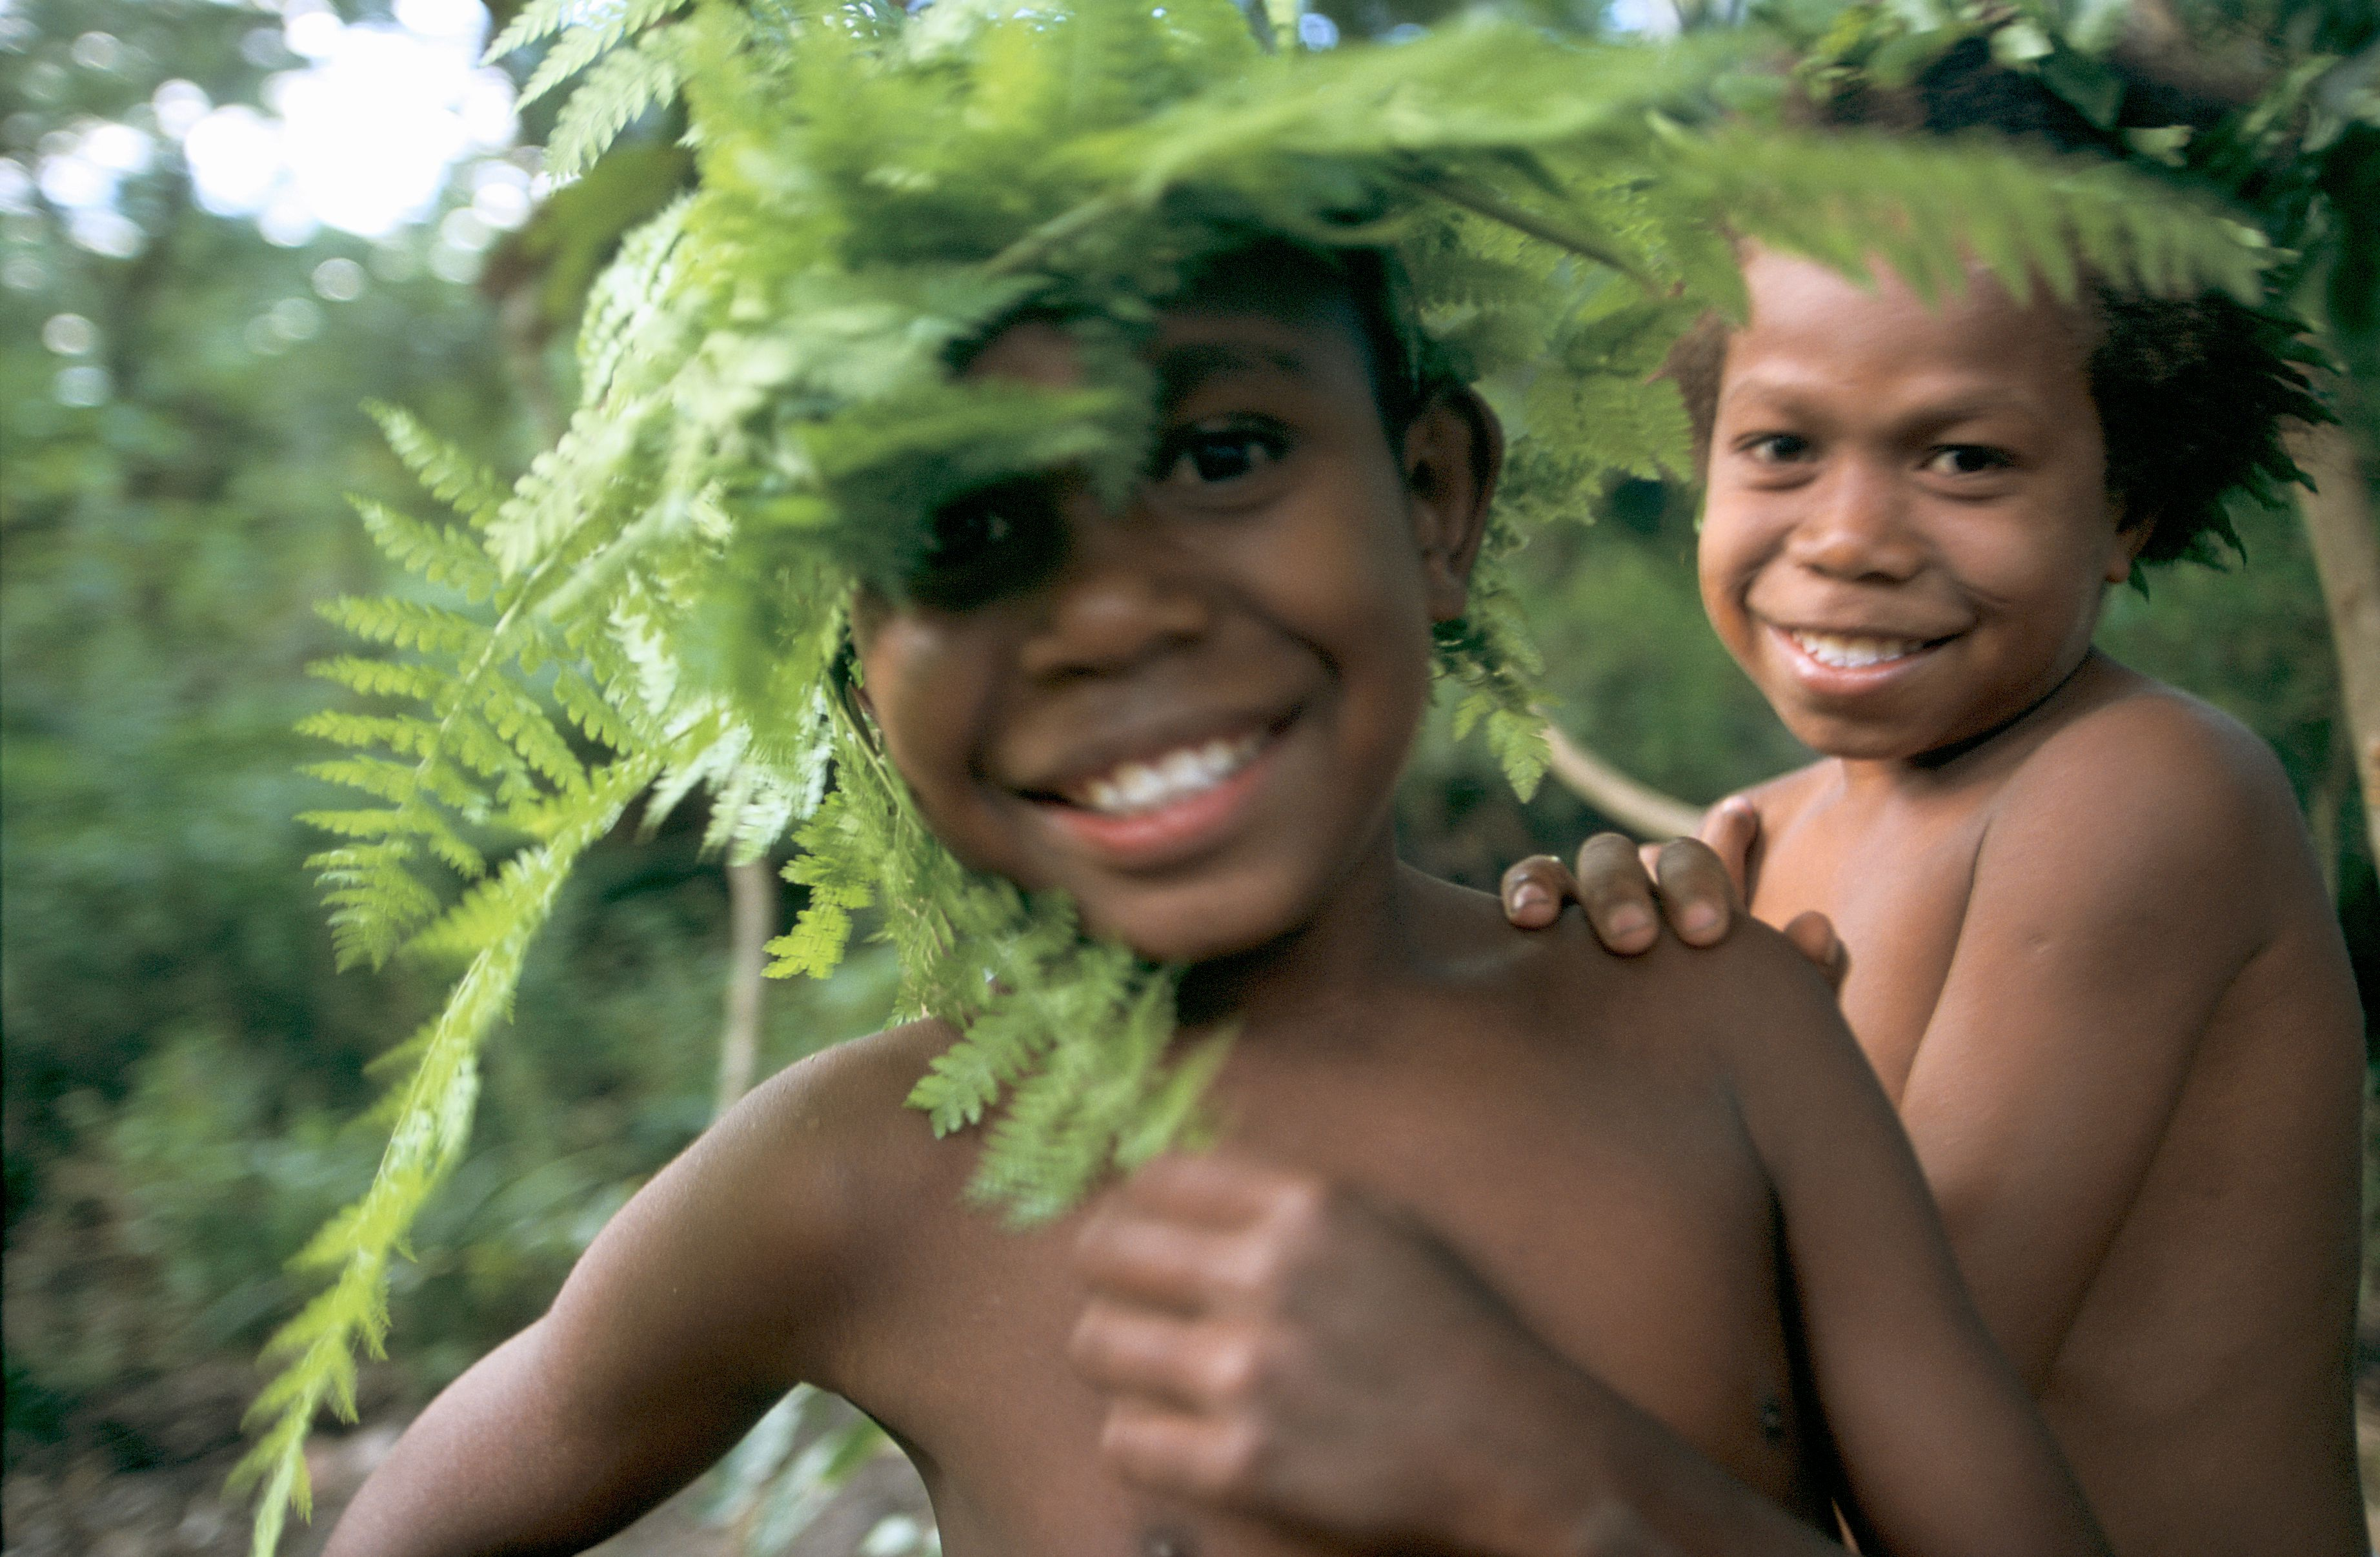 Child of Tanna island in Vanuatu - Massage love.